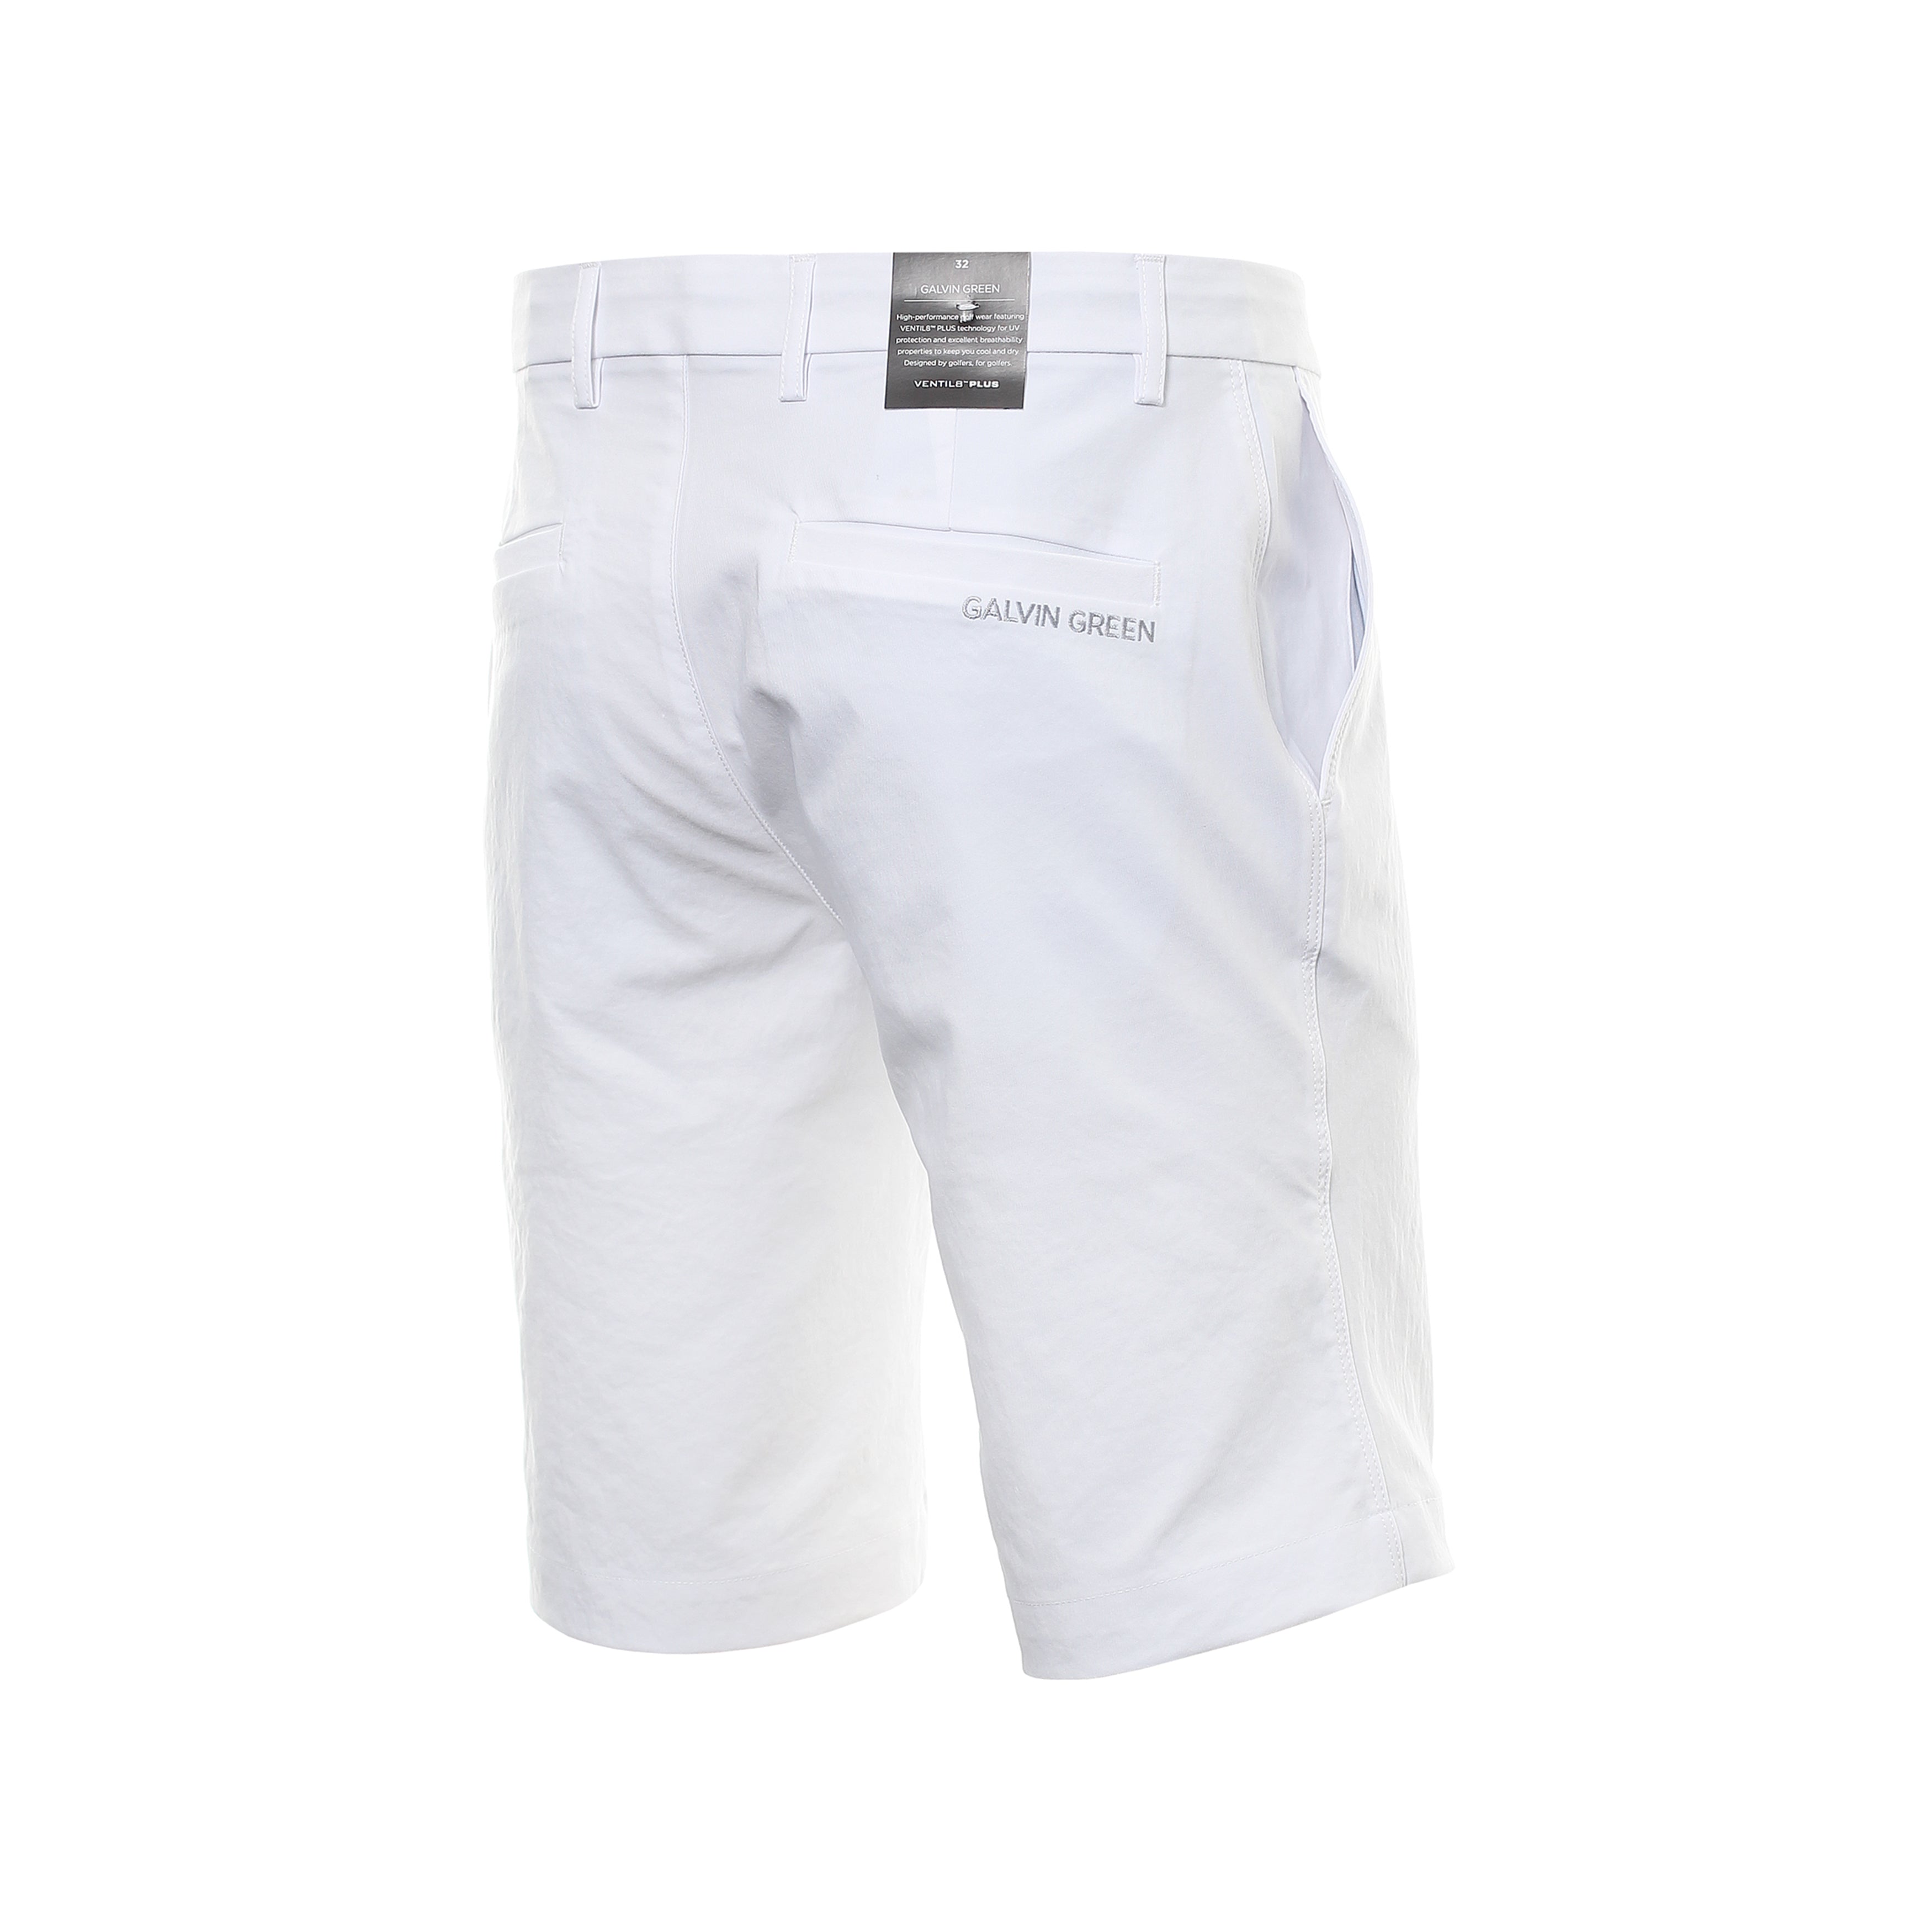 Galvin Green Paul Ventil8+ Golf Shorts White 9409 | Function18